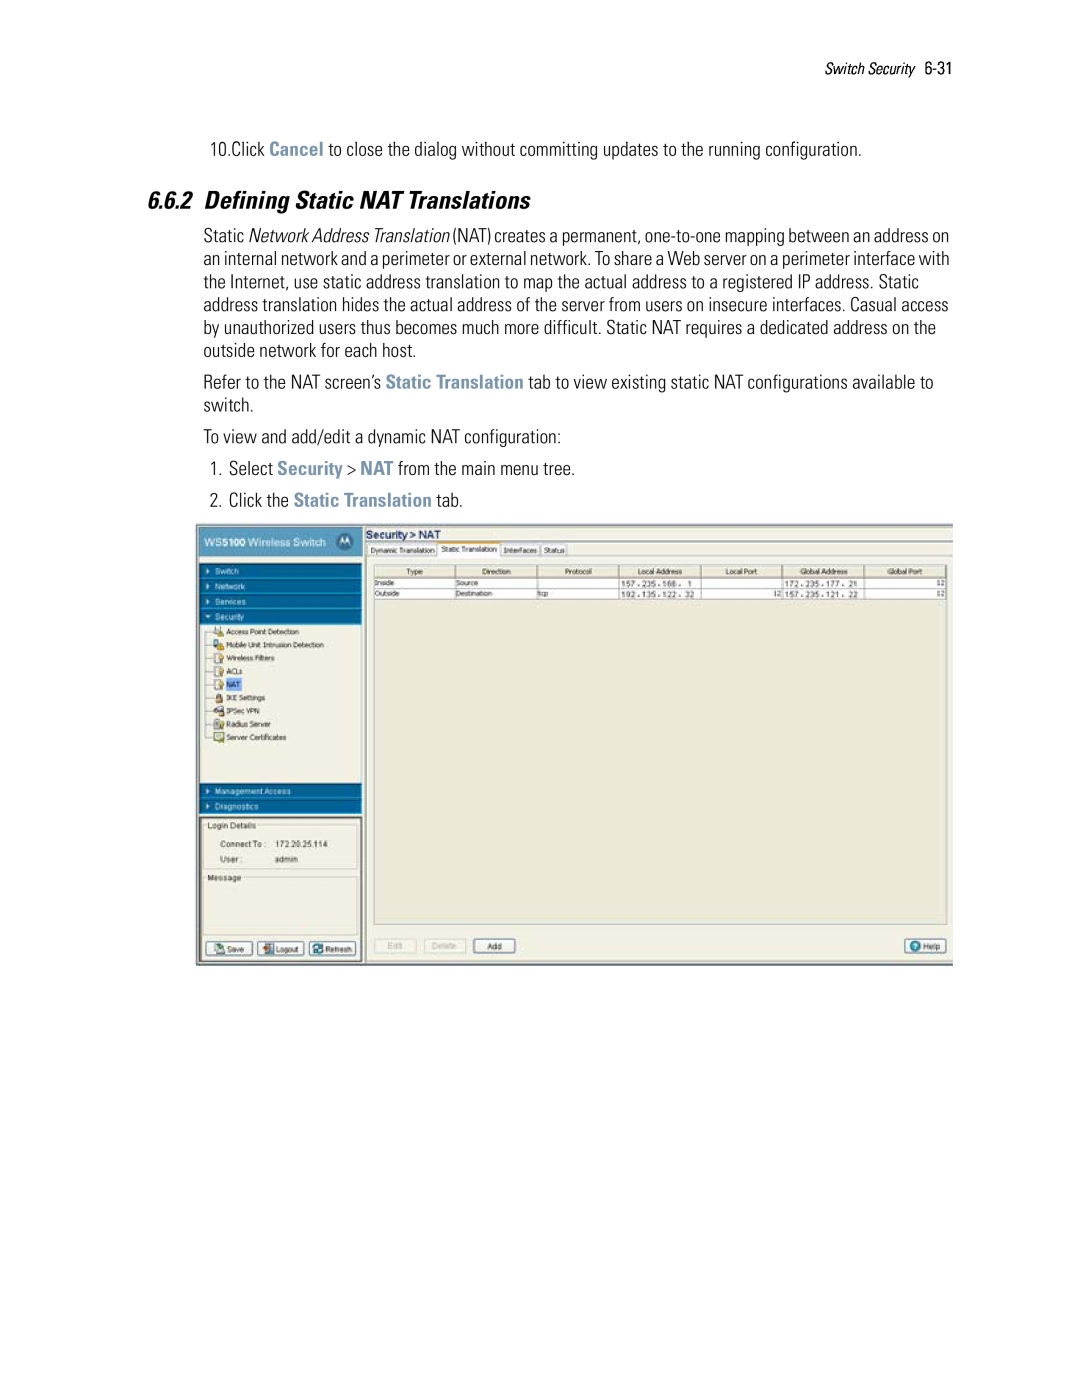 Motorola WS5100 manual Defining Static NAT Translations, Click the Static Translation tab 